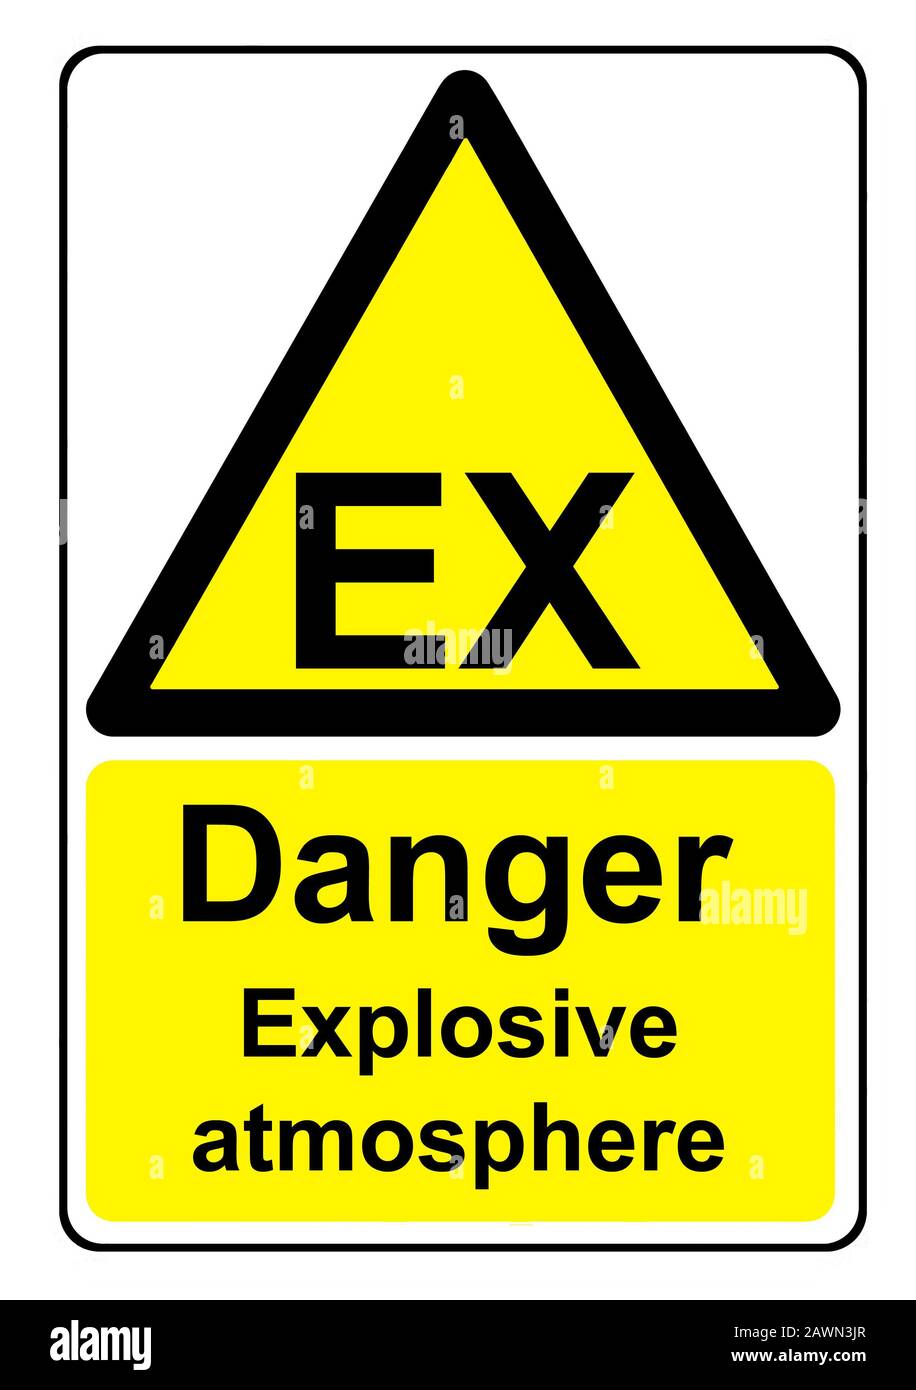 Danger Explosive Atmosphere yellow warning sign Stock Photo